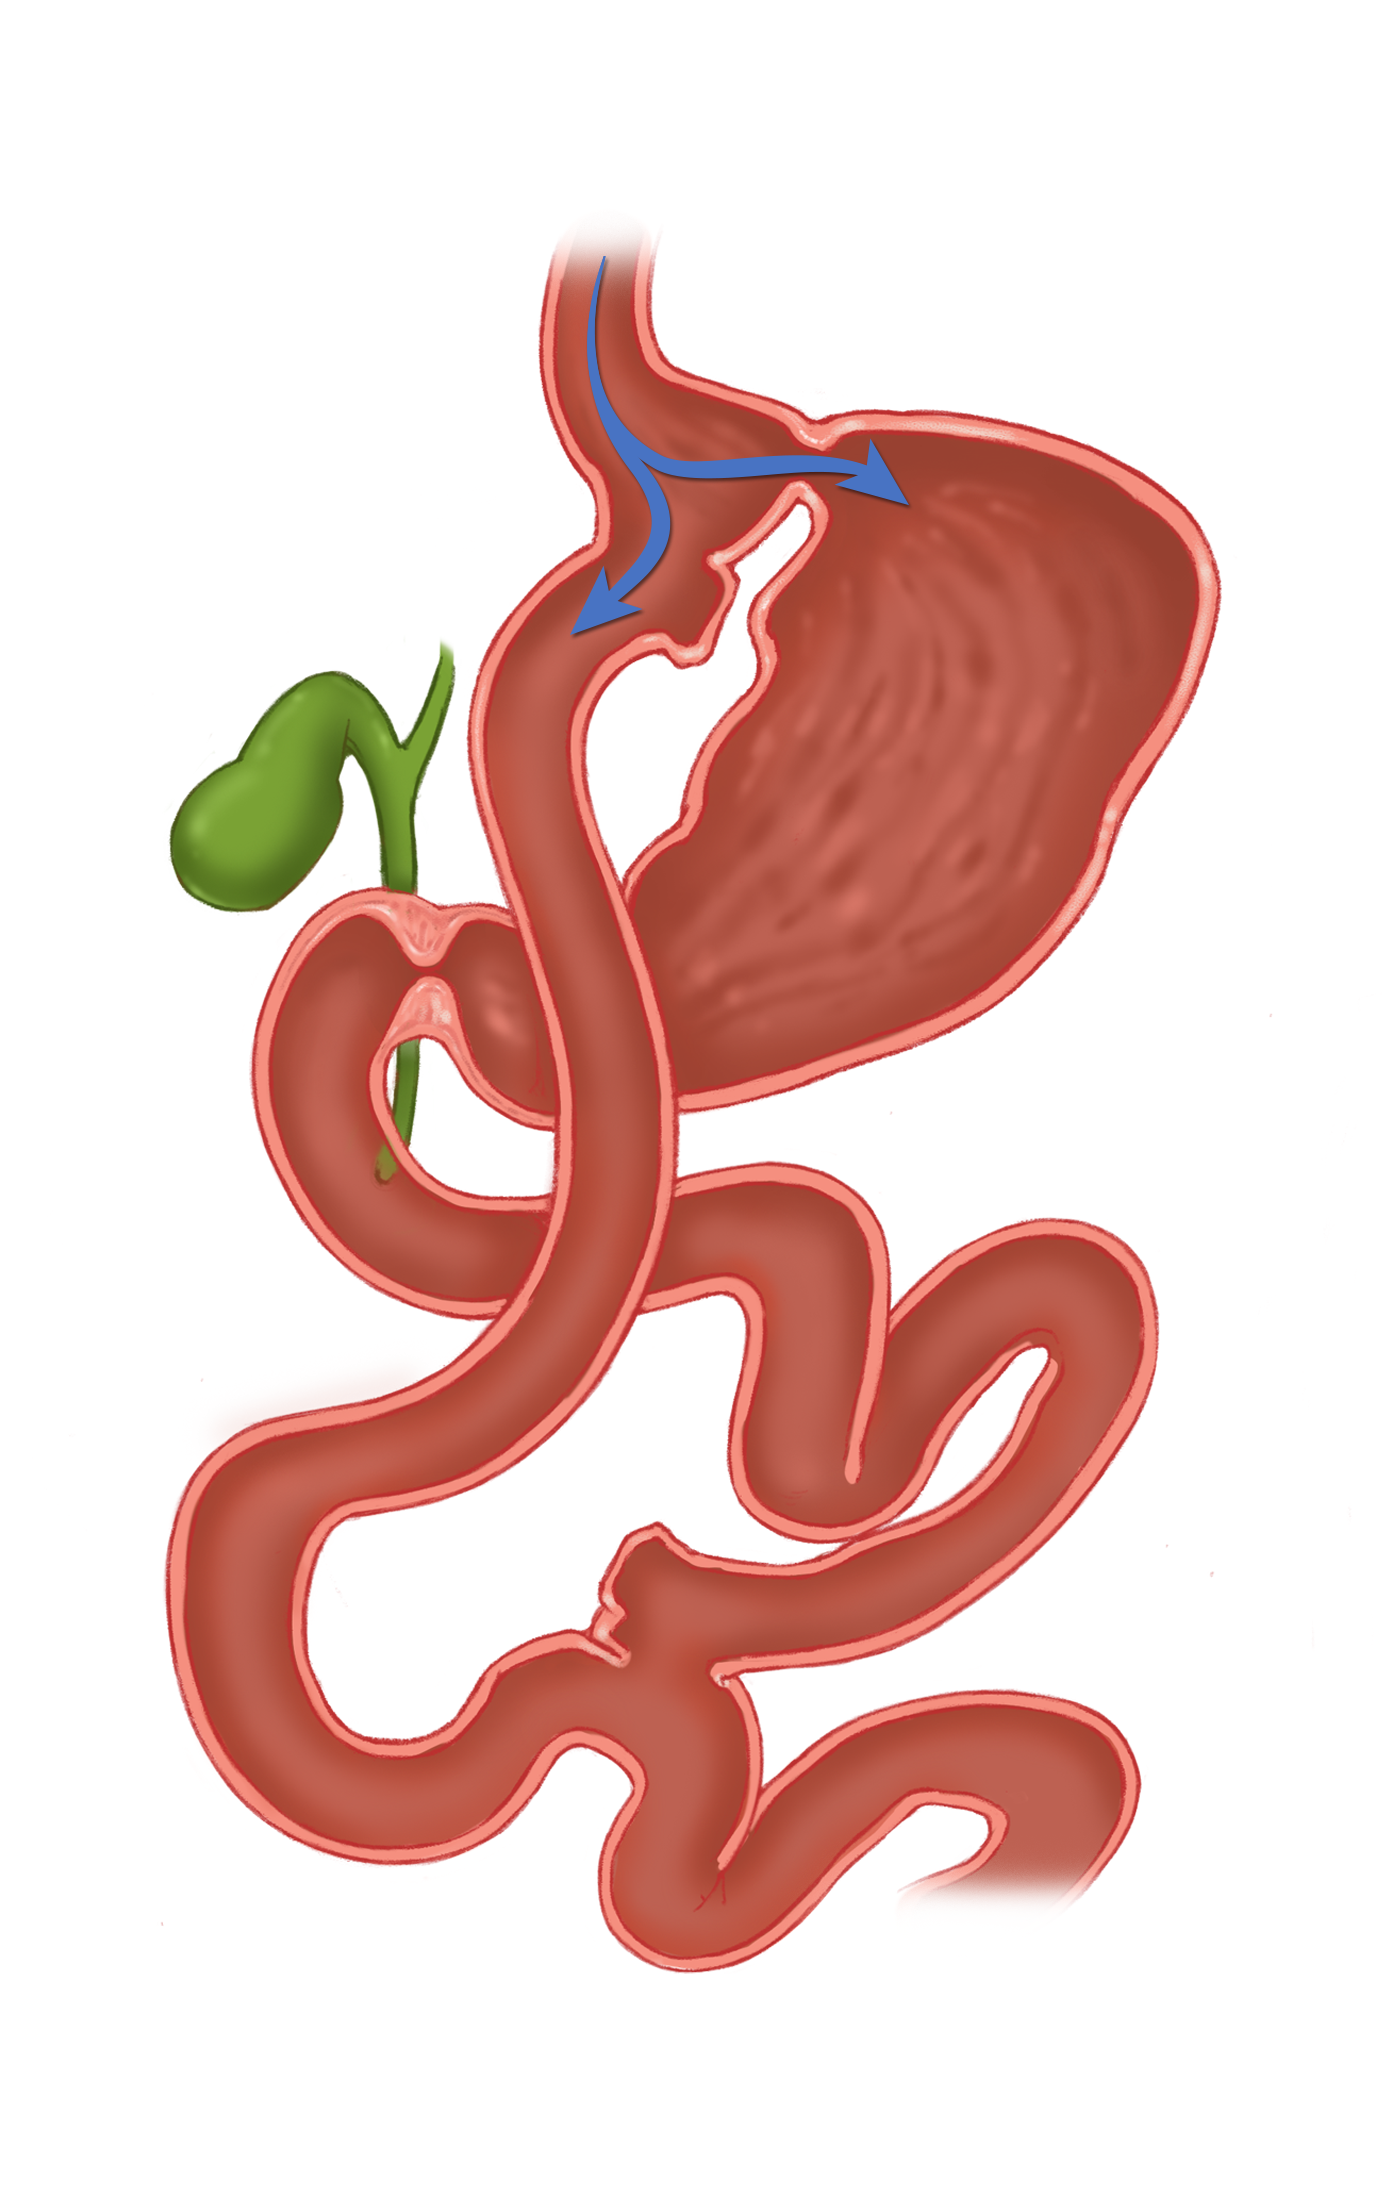 Roux-en-Y Gastric Bypass Gastrogastric Fistula